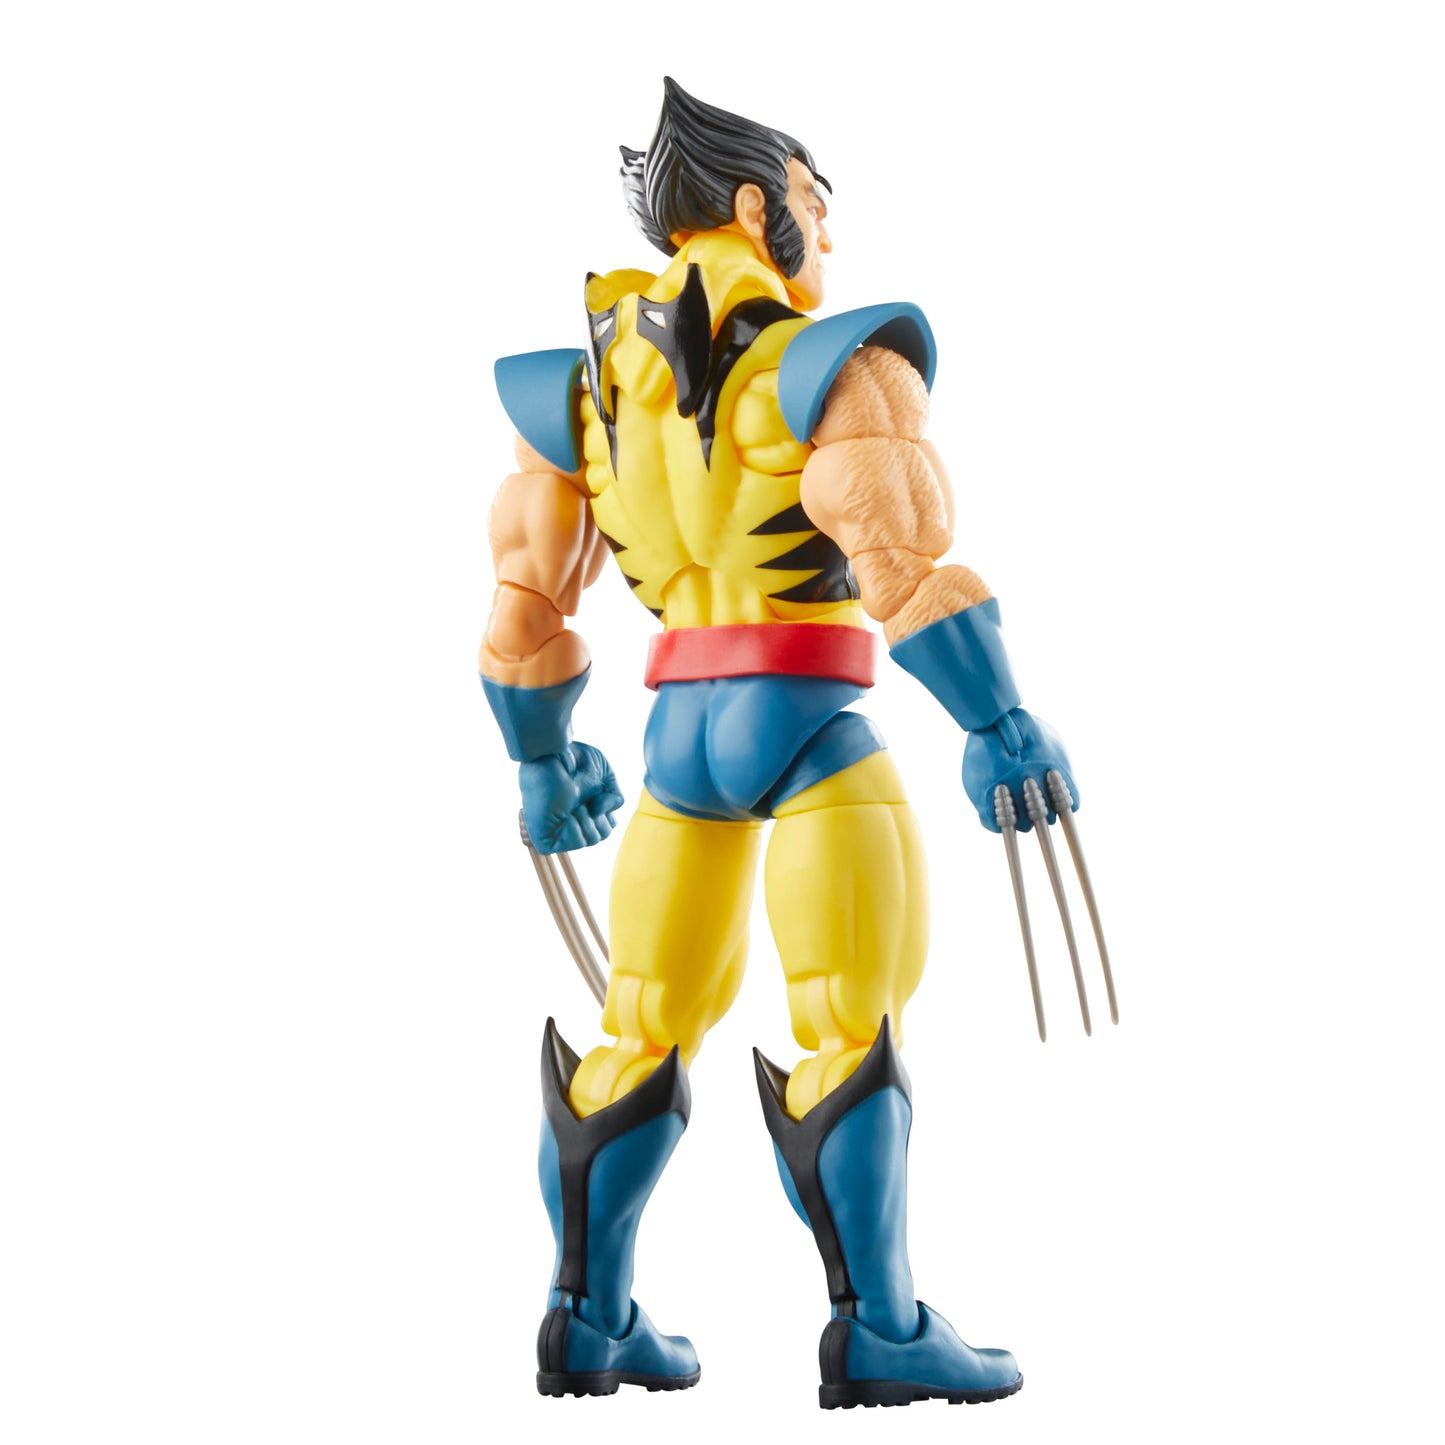 Hasbro Marvel Legends Series Wolverine Action Figure Toy back pose - Heretoserveyou